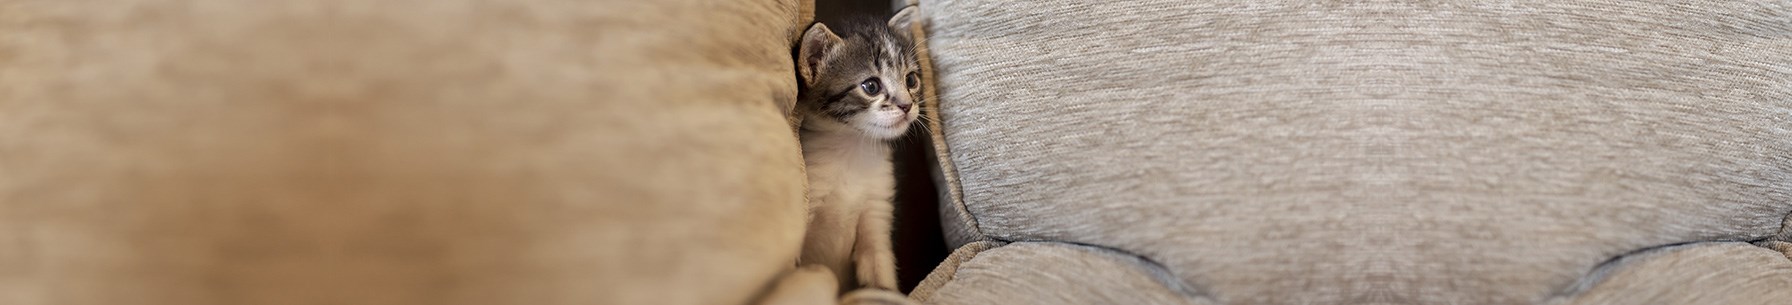 kitten in-between sofa cushions